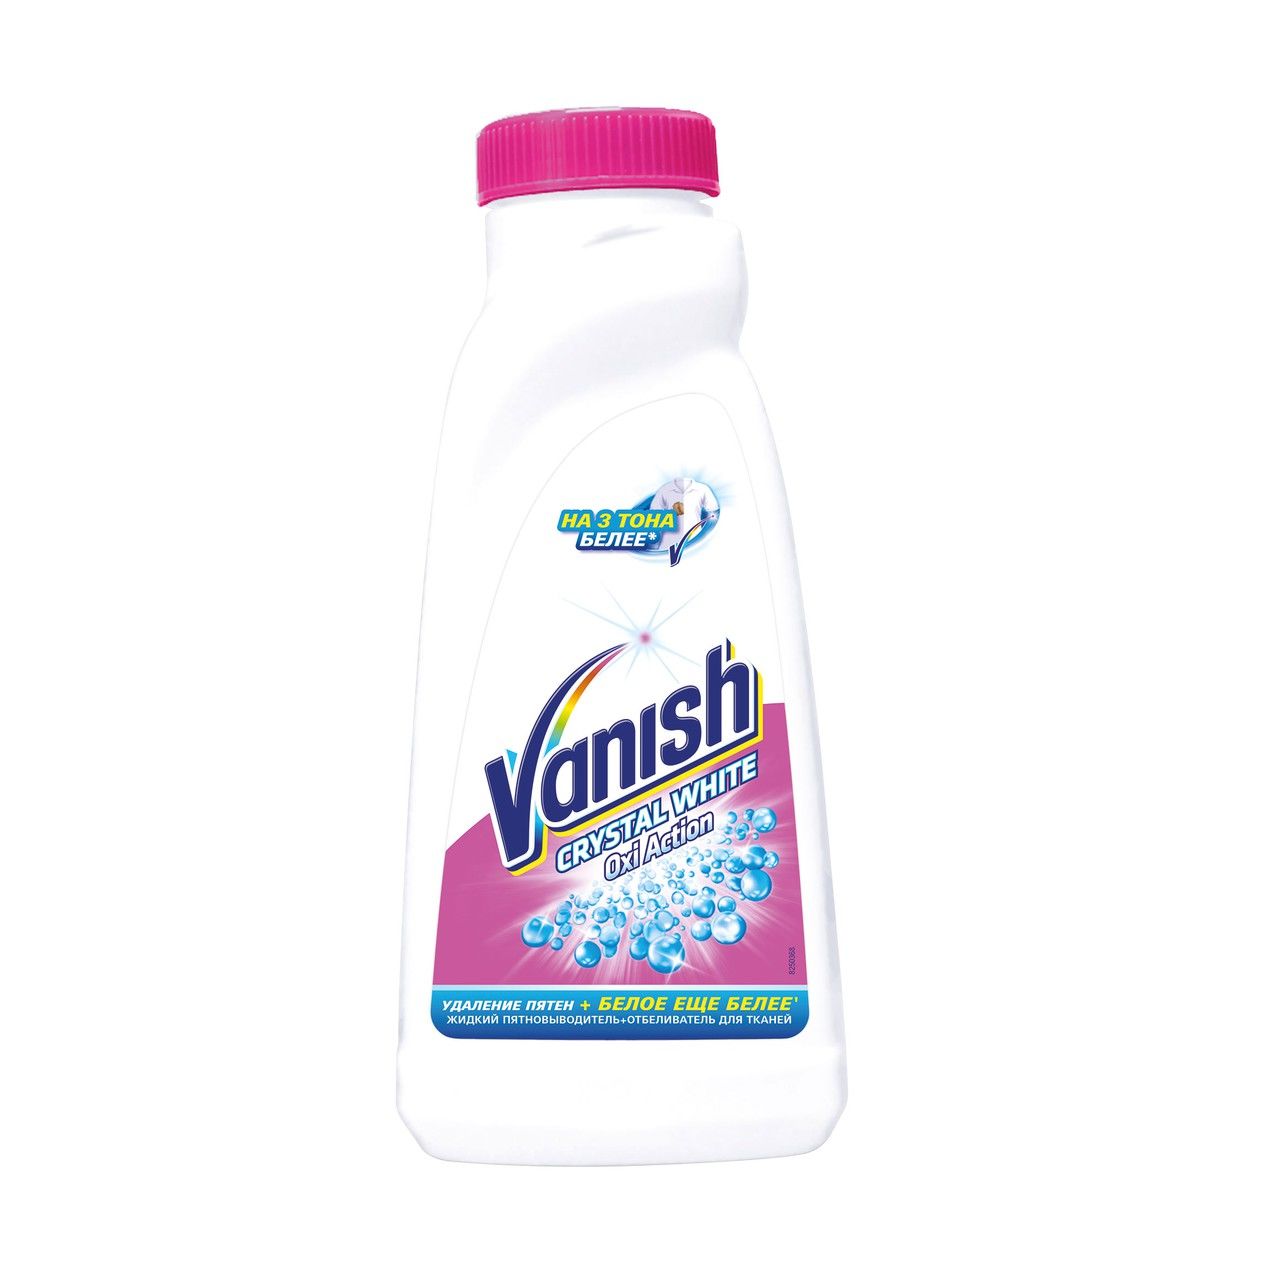   (Vanish) OXI Action   ,  450,  184  Vanish